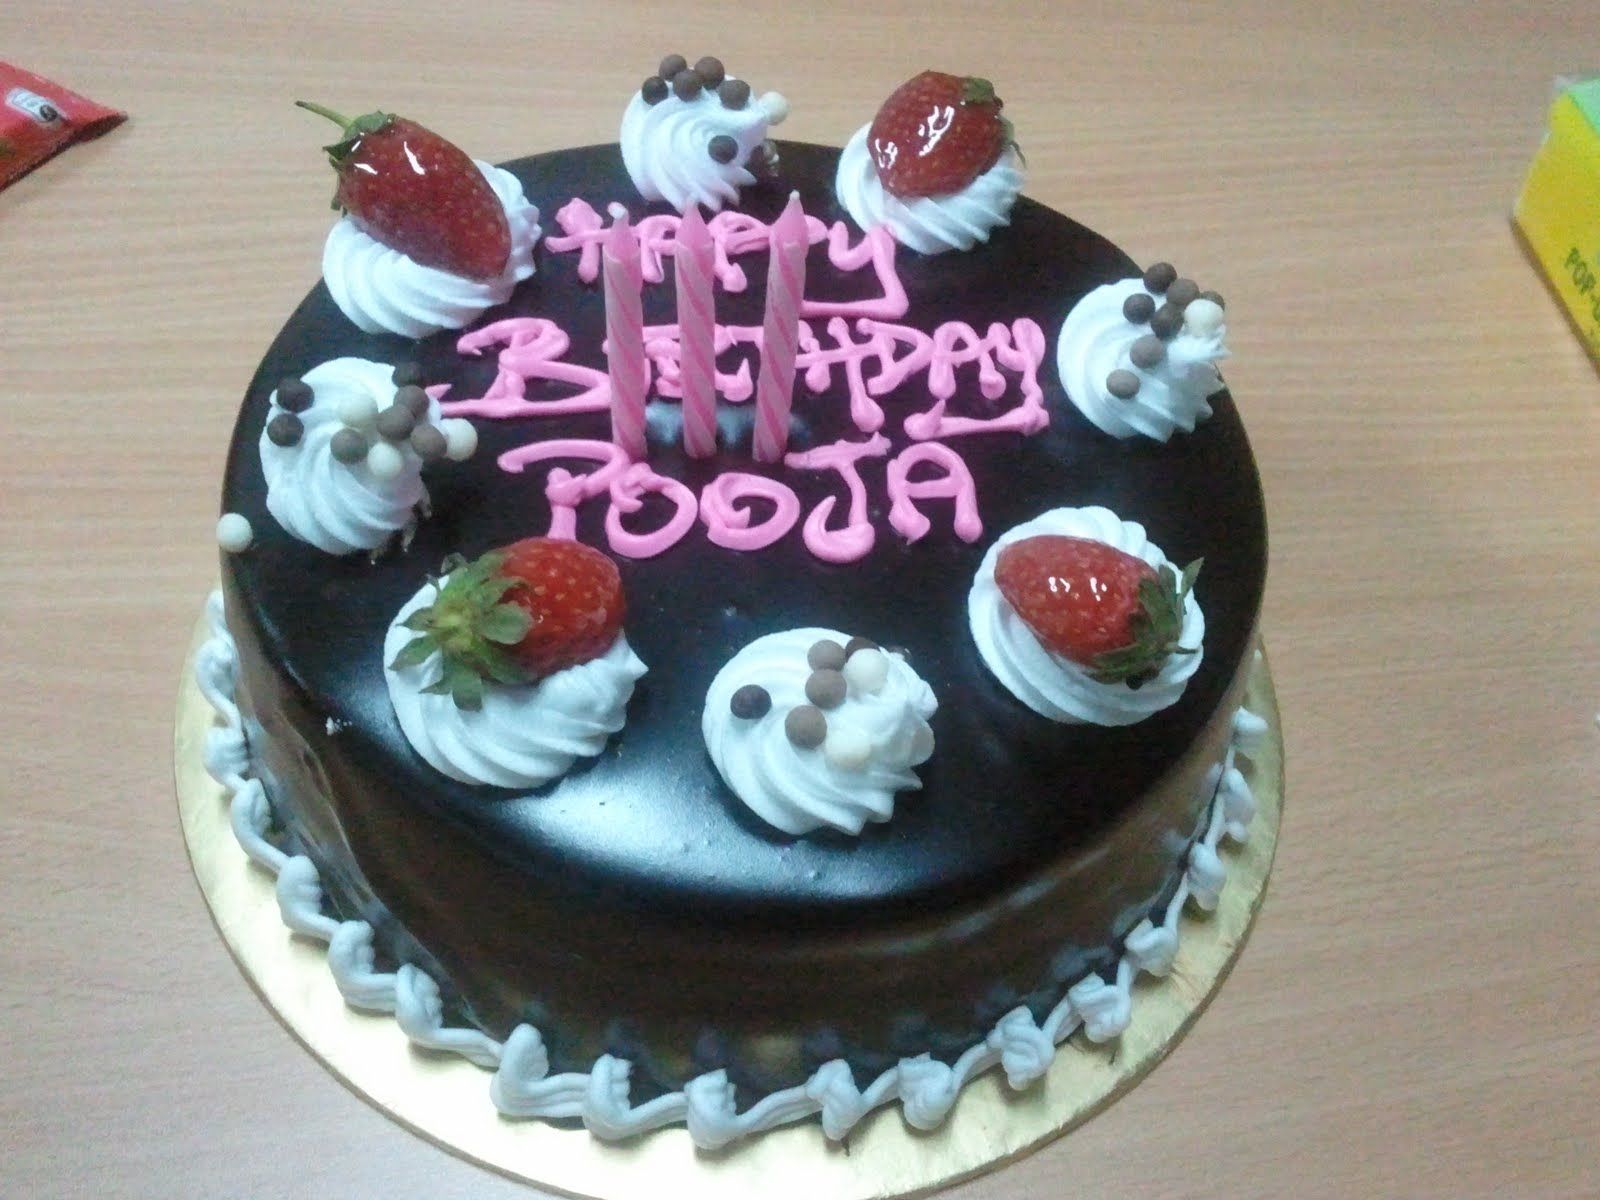 Happy Birthday Pooja Birthday Cake Name Pooja 433025 Hd Wallpaper Backgrounds Download